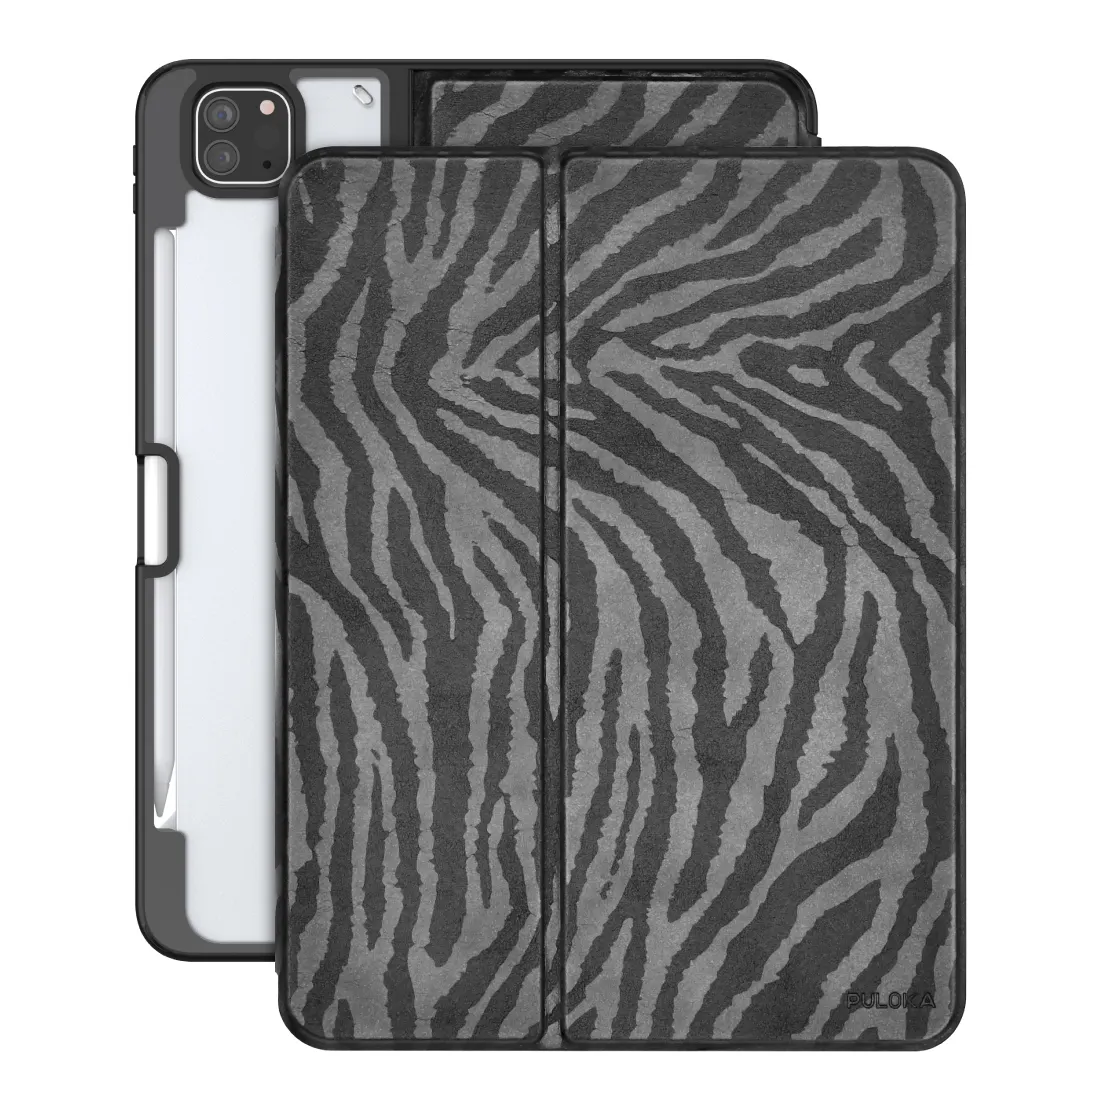 PULOKA casing kulit Zebra untuk iPad, casing generasi ke-6 ke-7 dengan tempat pensil, penutup Folio pelindung tahan guncangan model baru untuk iPad